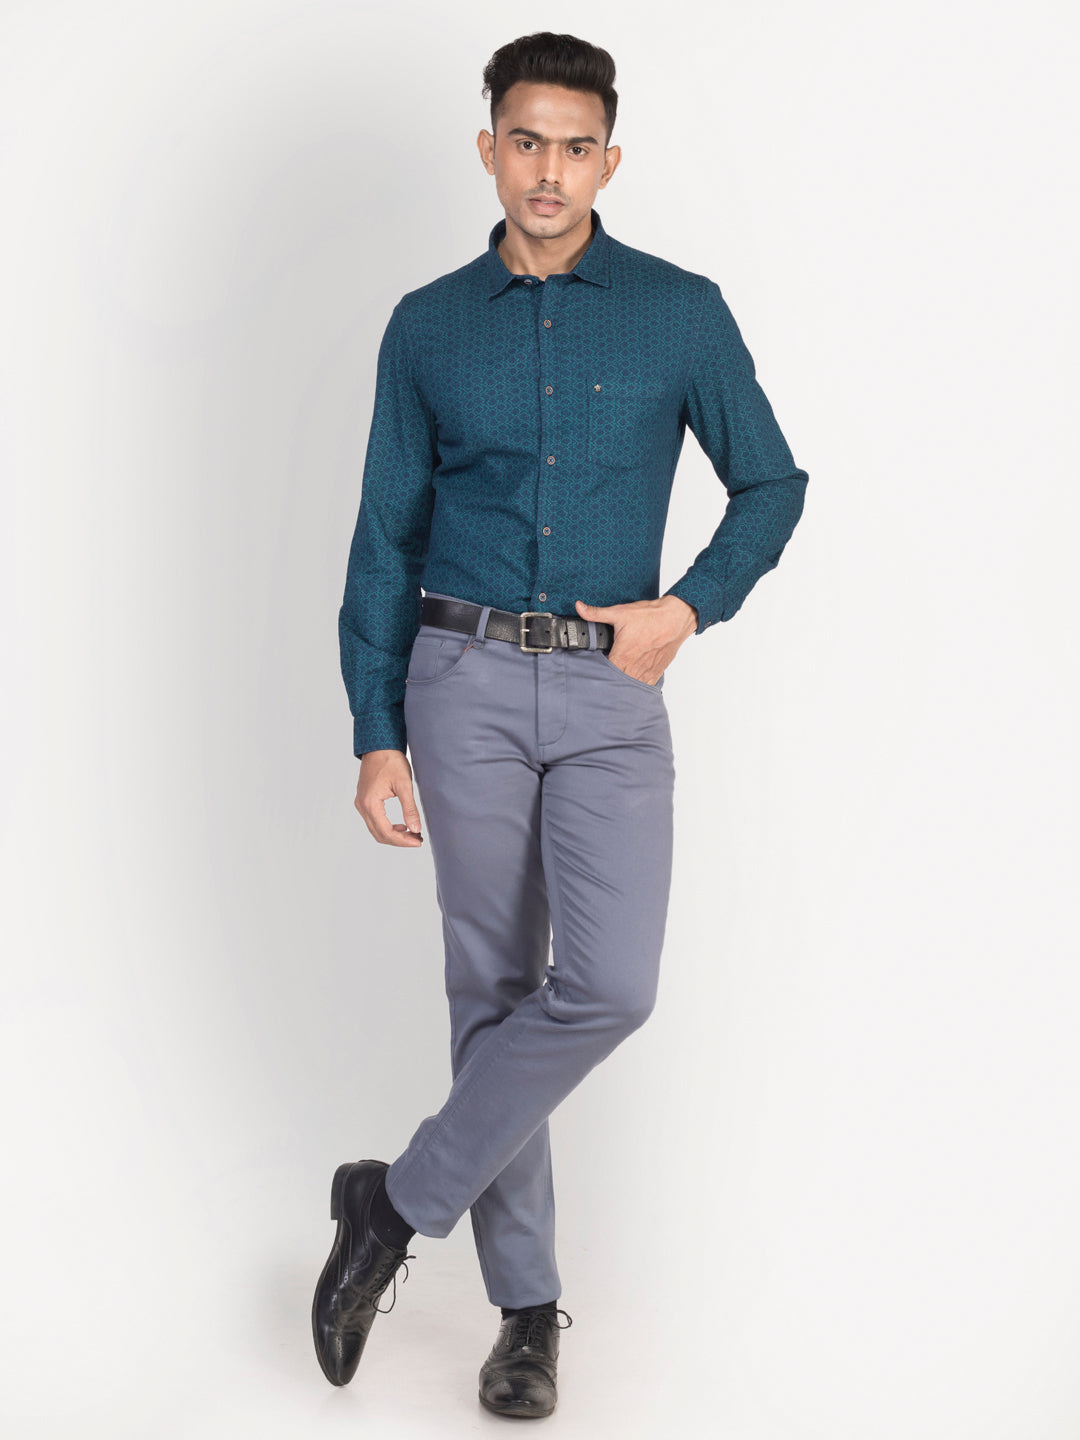 100% Cotton Indigo Blue Printed Slim Fit Full Sleeve Casual Shirt